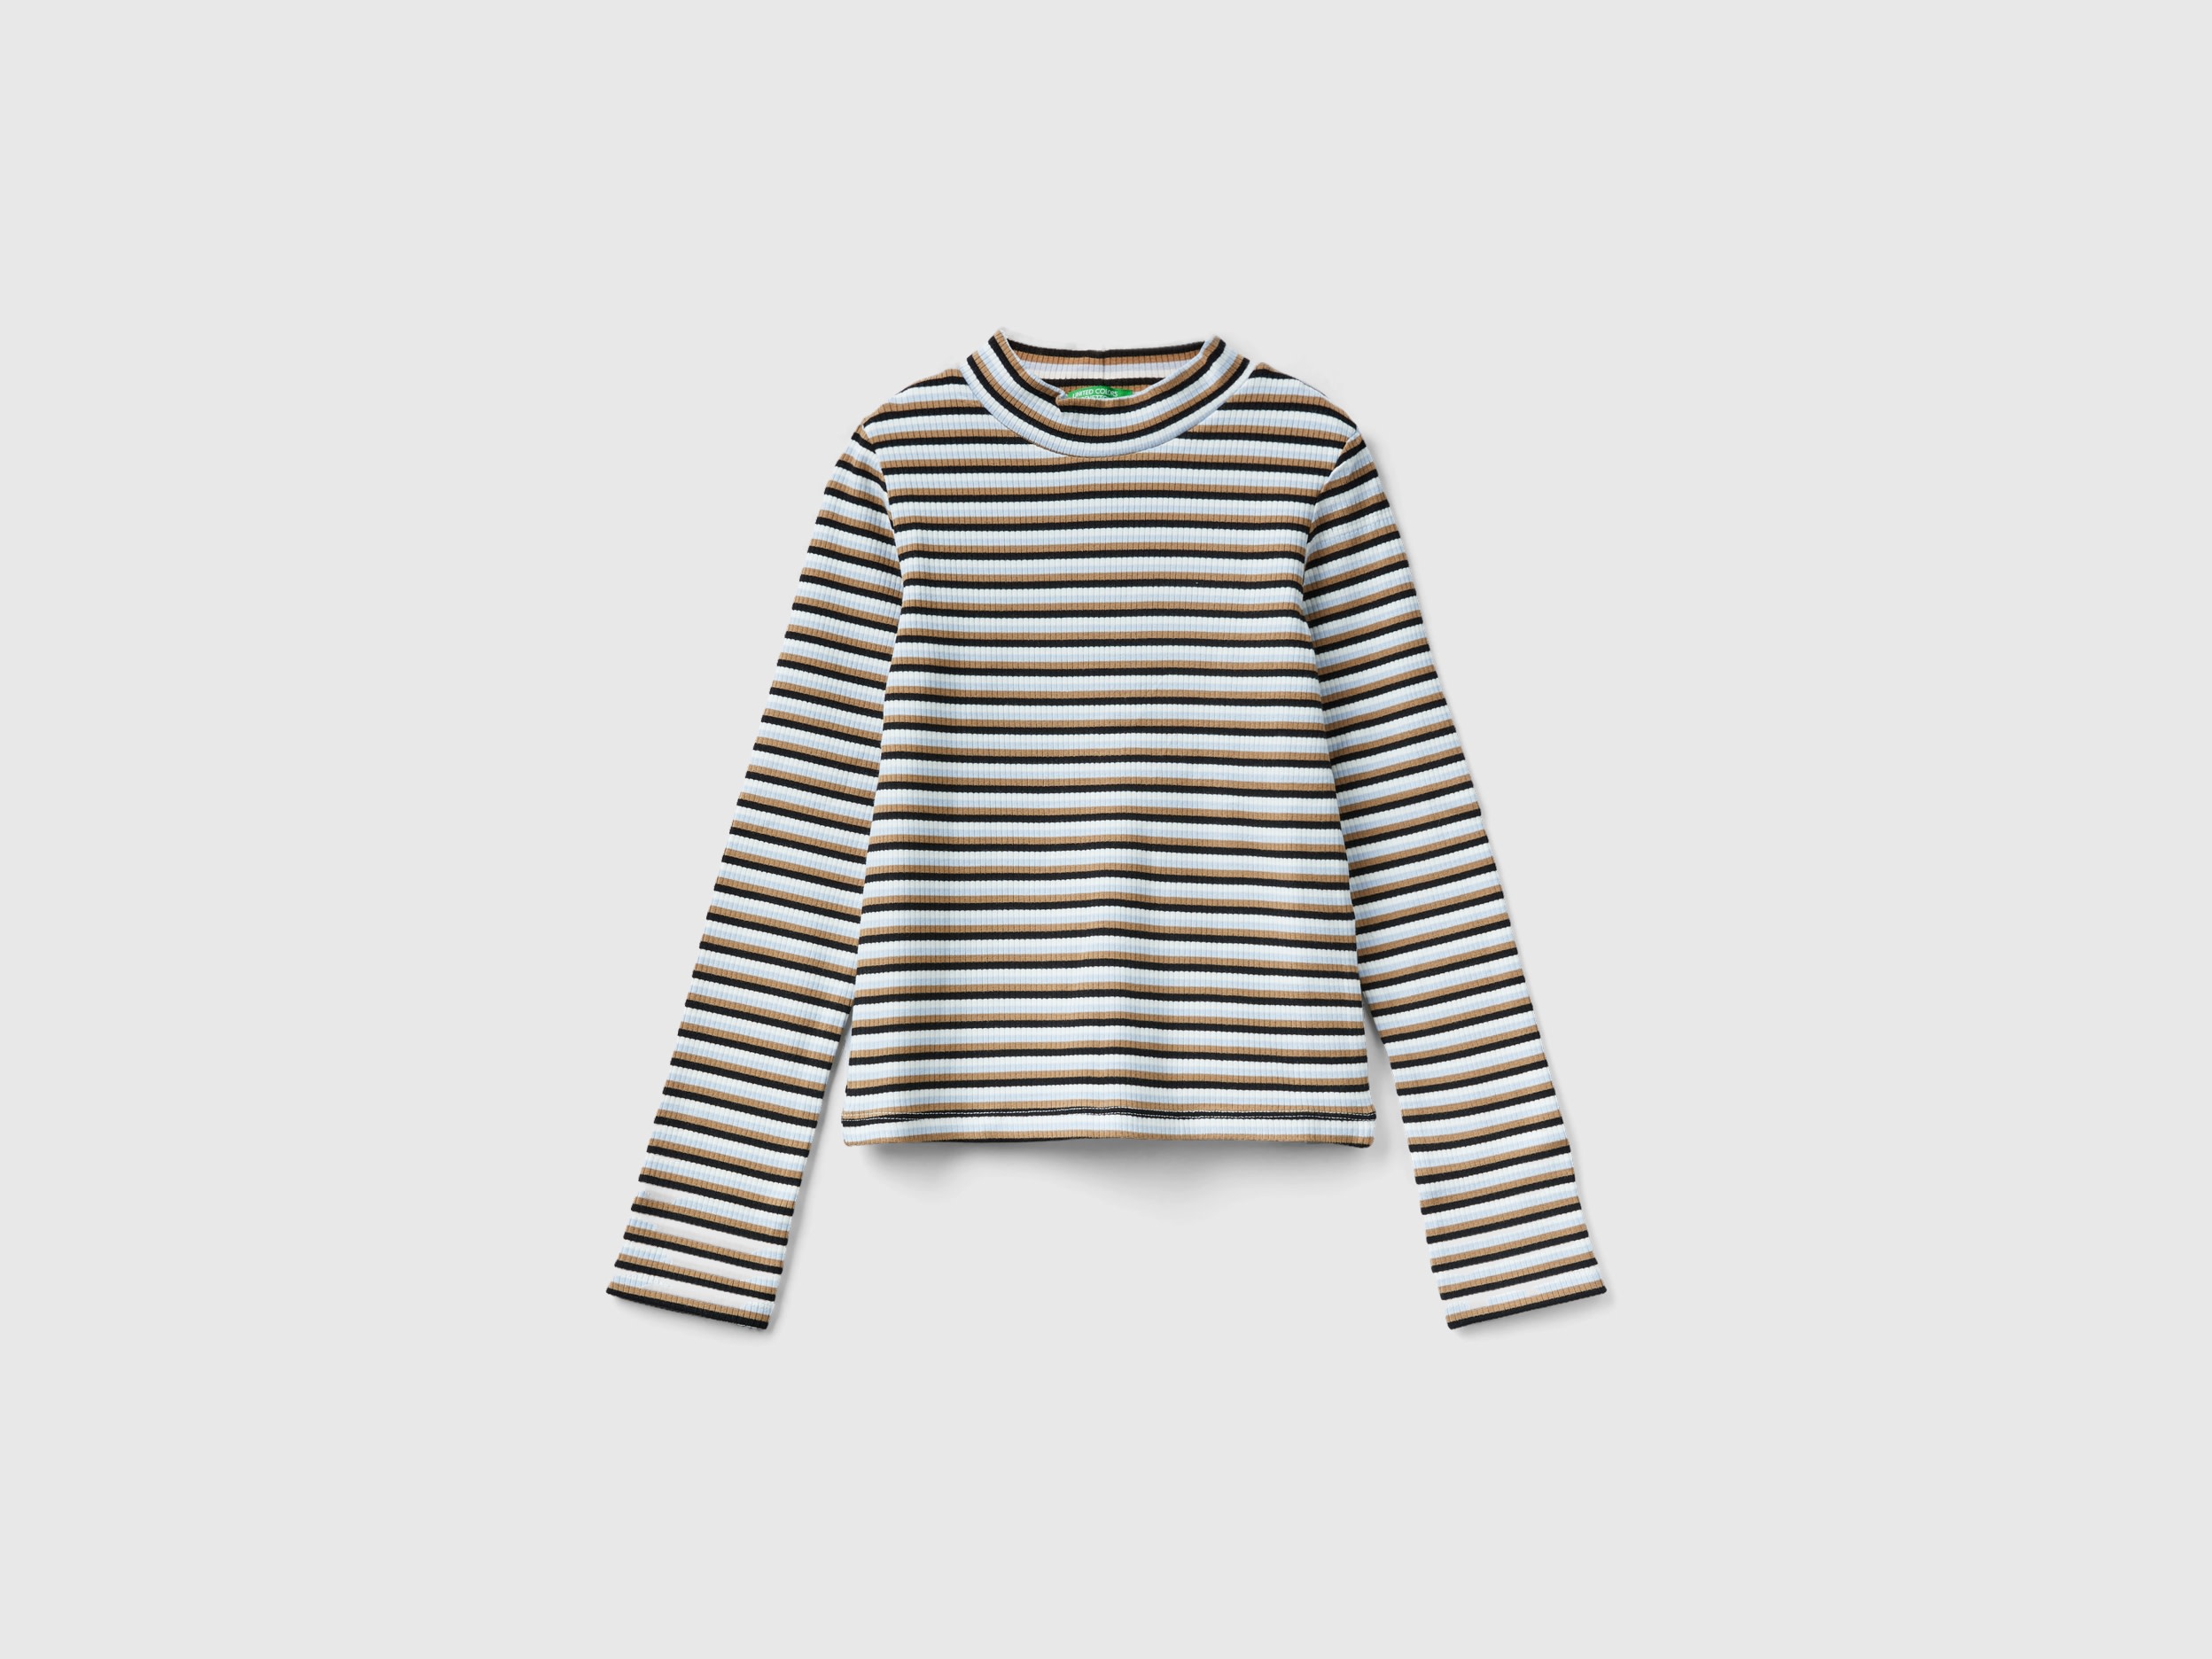 Benetton, Striped Turtleneck T-shirt, size L, Multi-color, Kids